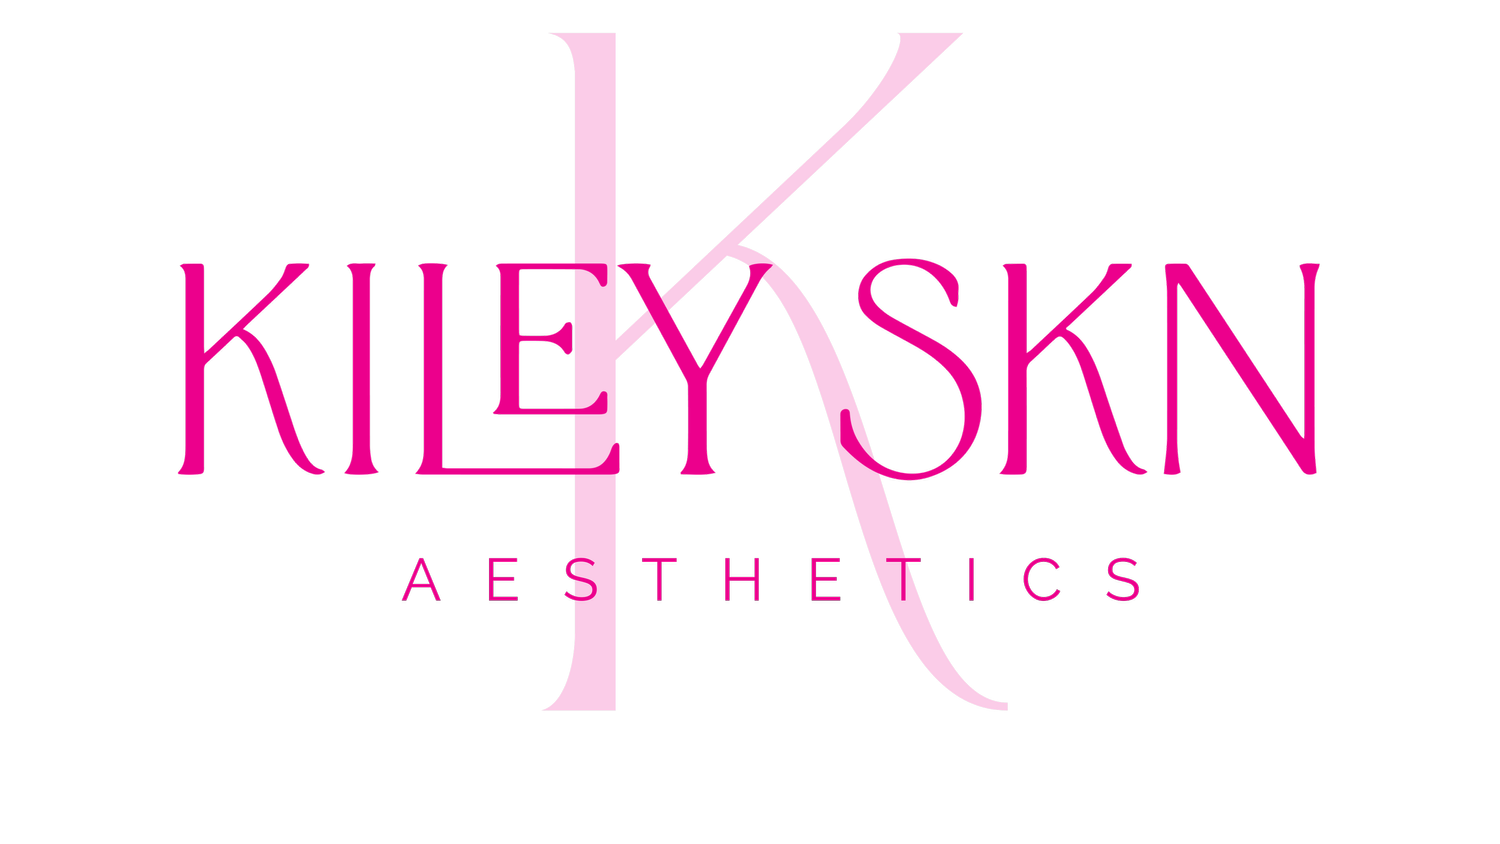 Kiley SKN Aesthetics 